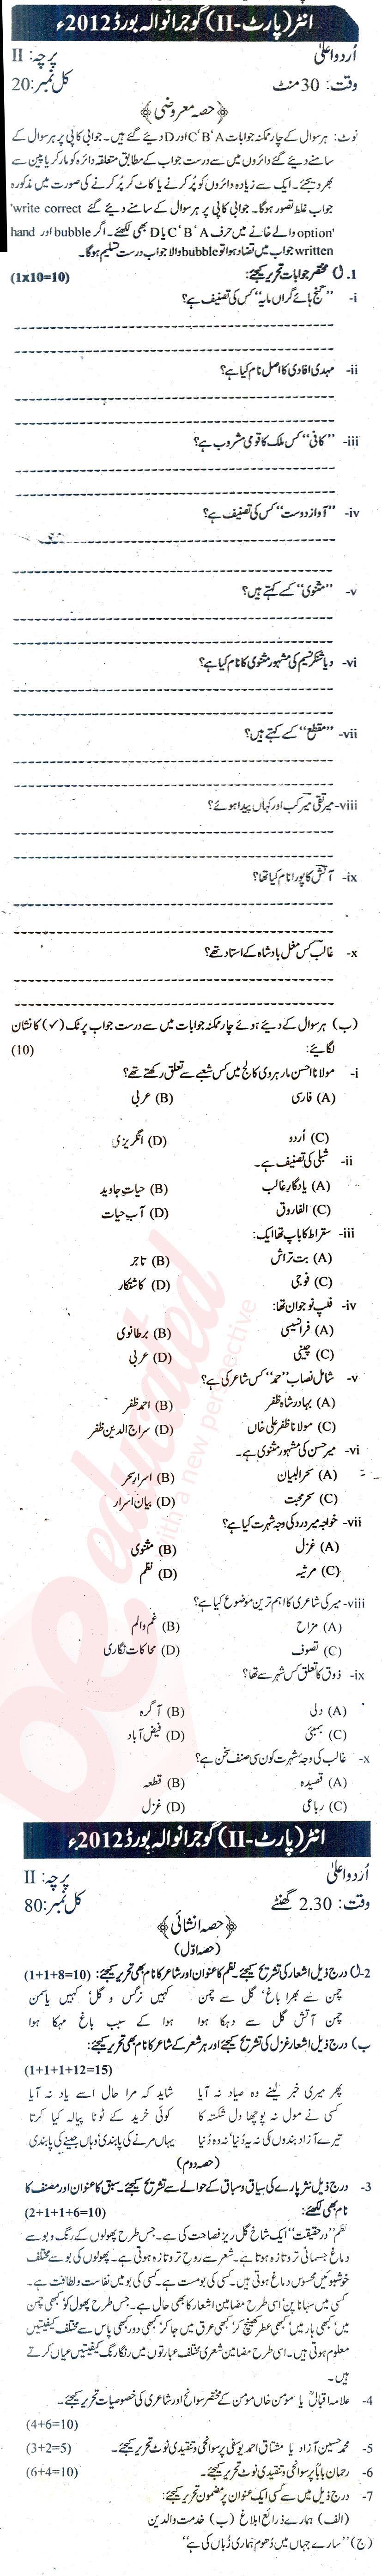 Urdu 12th class Past Paper Group 1 BISE Gujranwala 2012